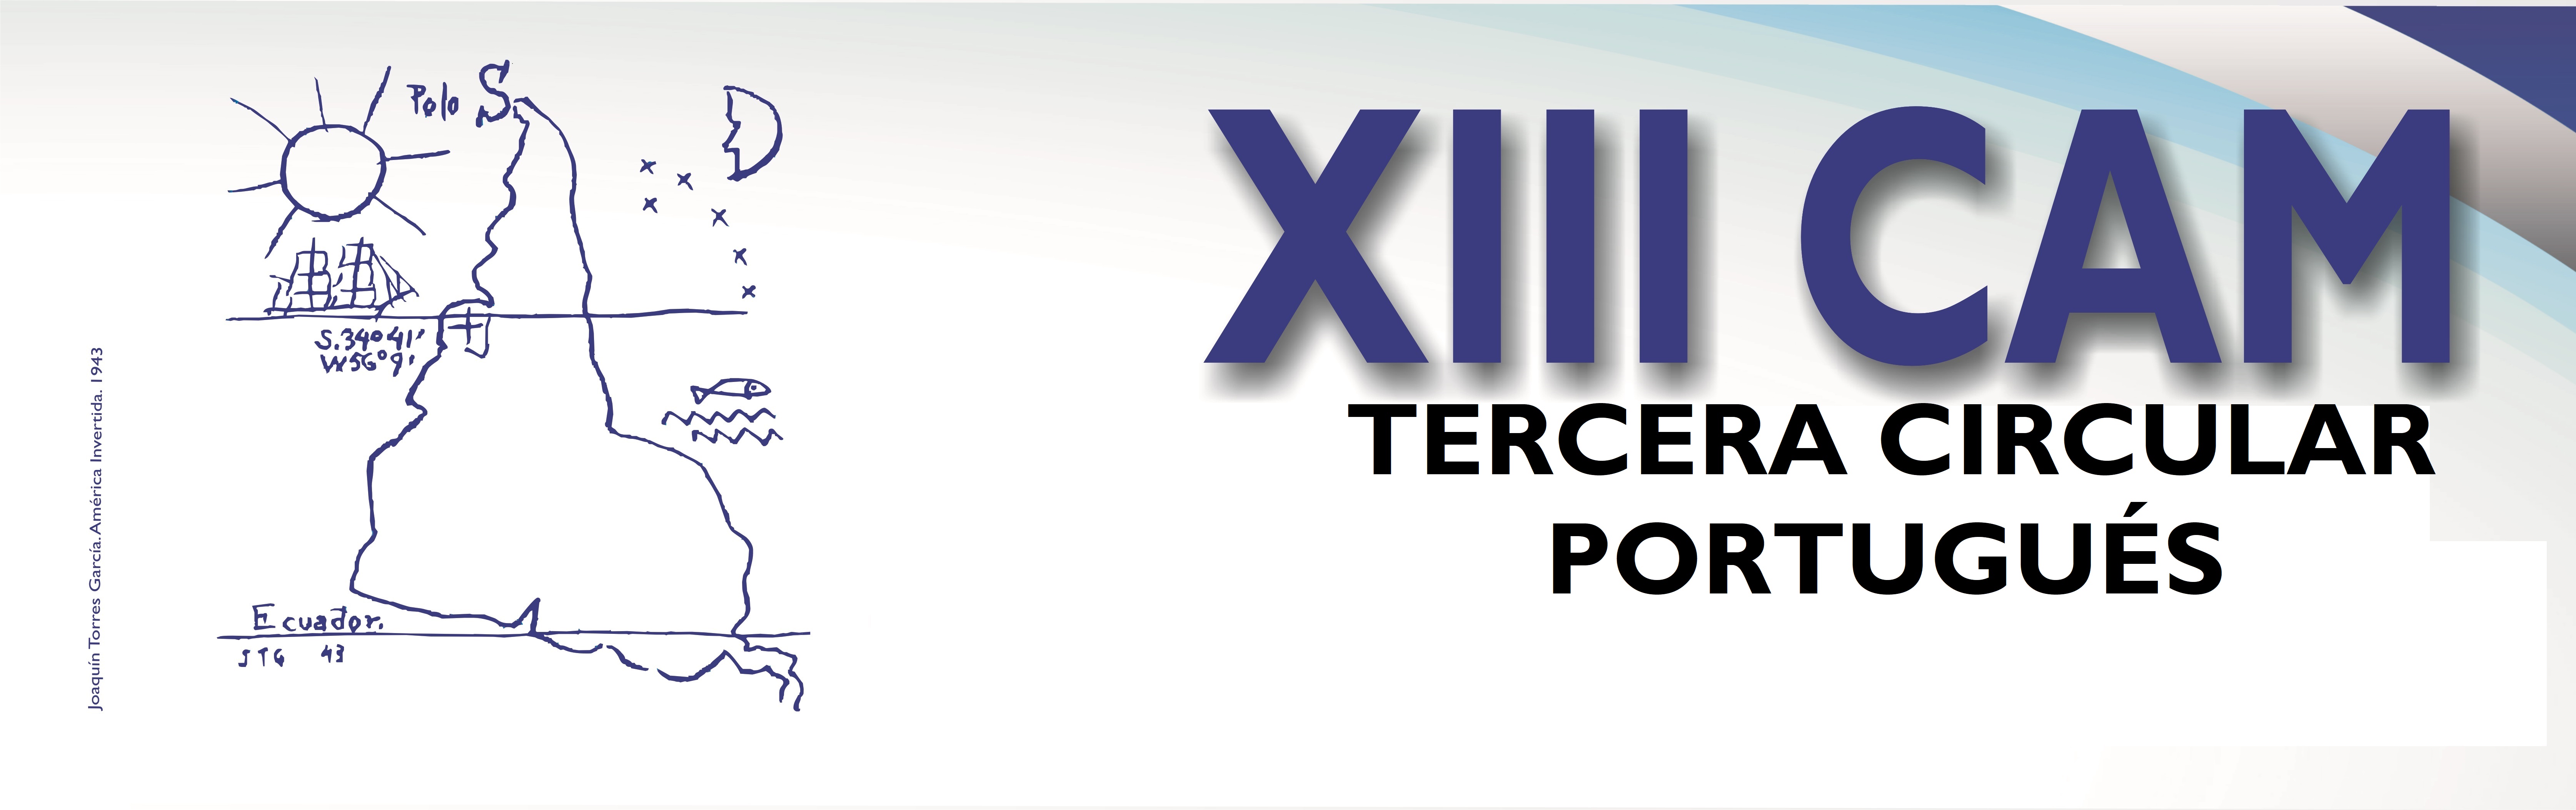 logo de Tercera circular decimotercer congreso de archivologia del mercosur en portugues